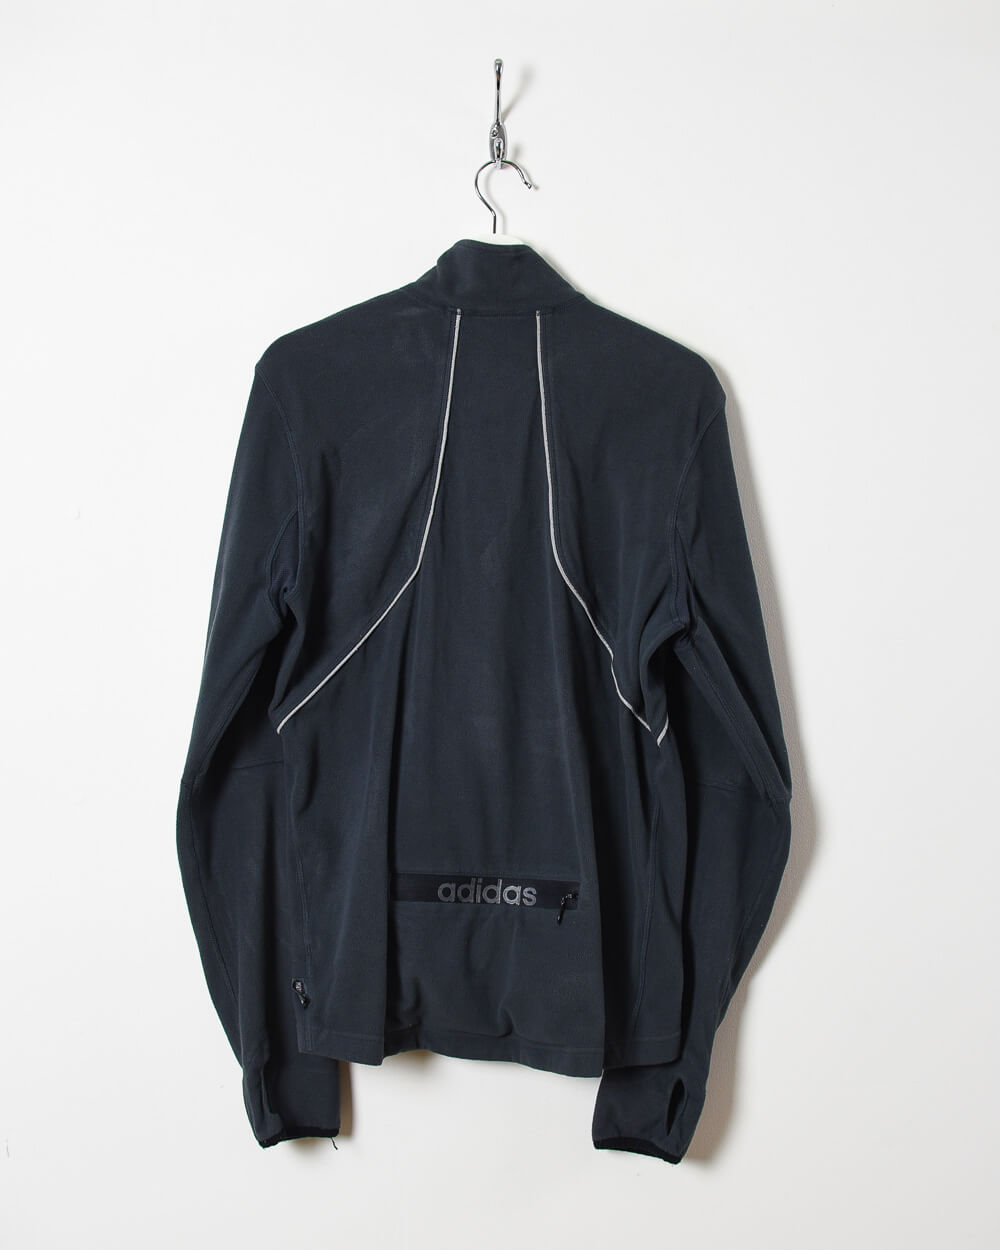 Grey Adidas 1/4 Zip Fleece - Medium